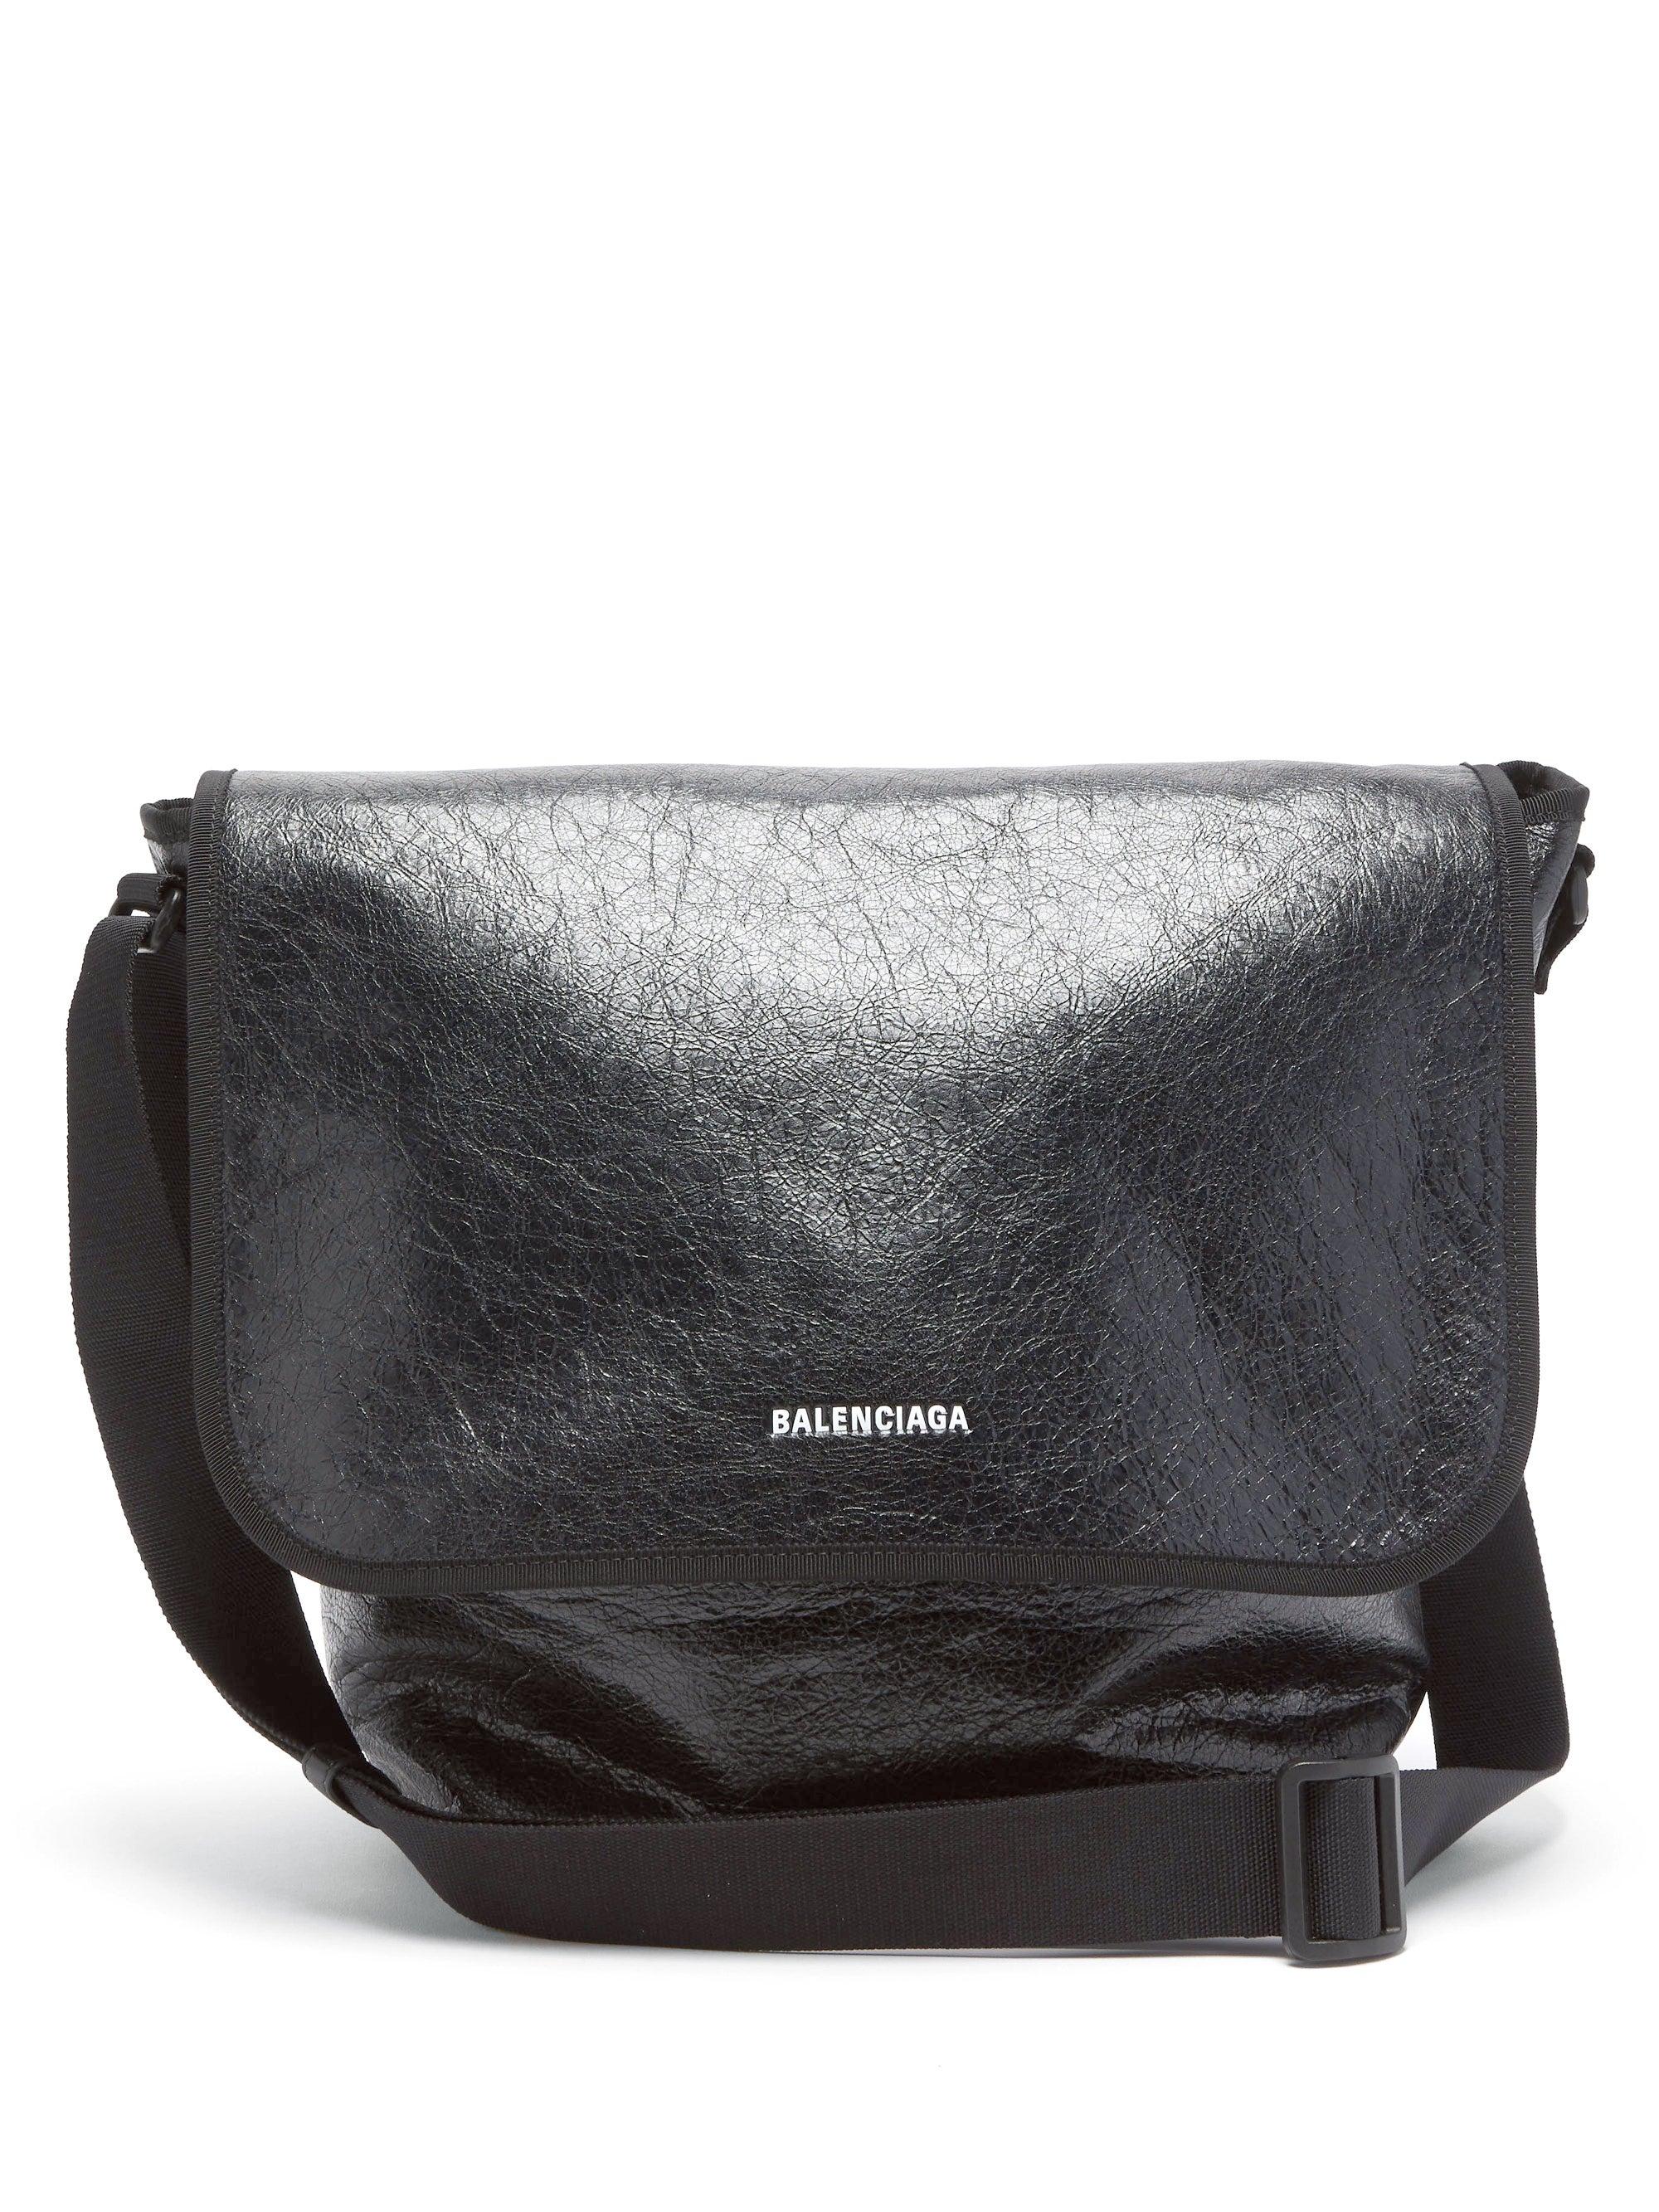 Balenciaga Explorer Textured-leather Messenger Bag for Men - Lyst